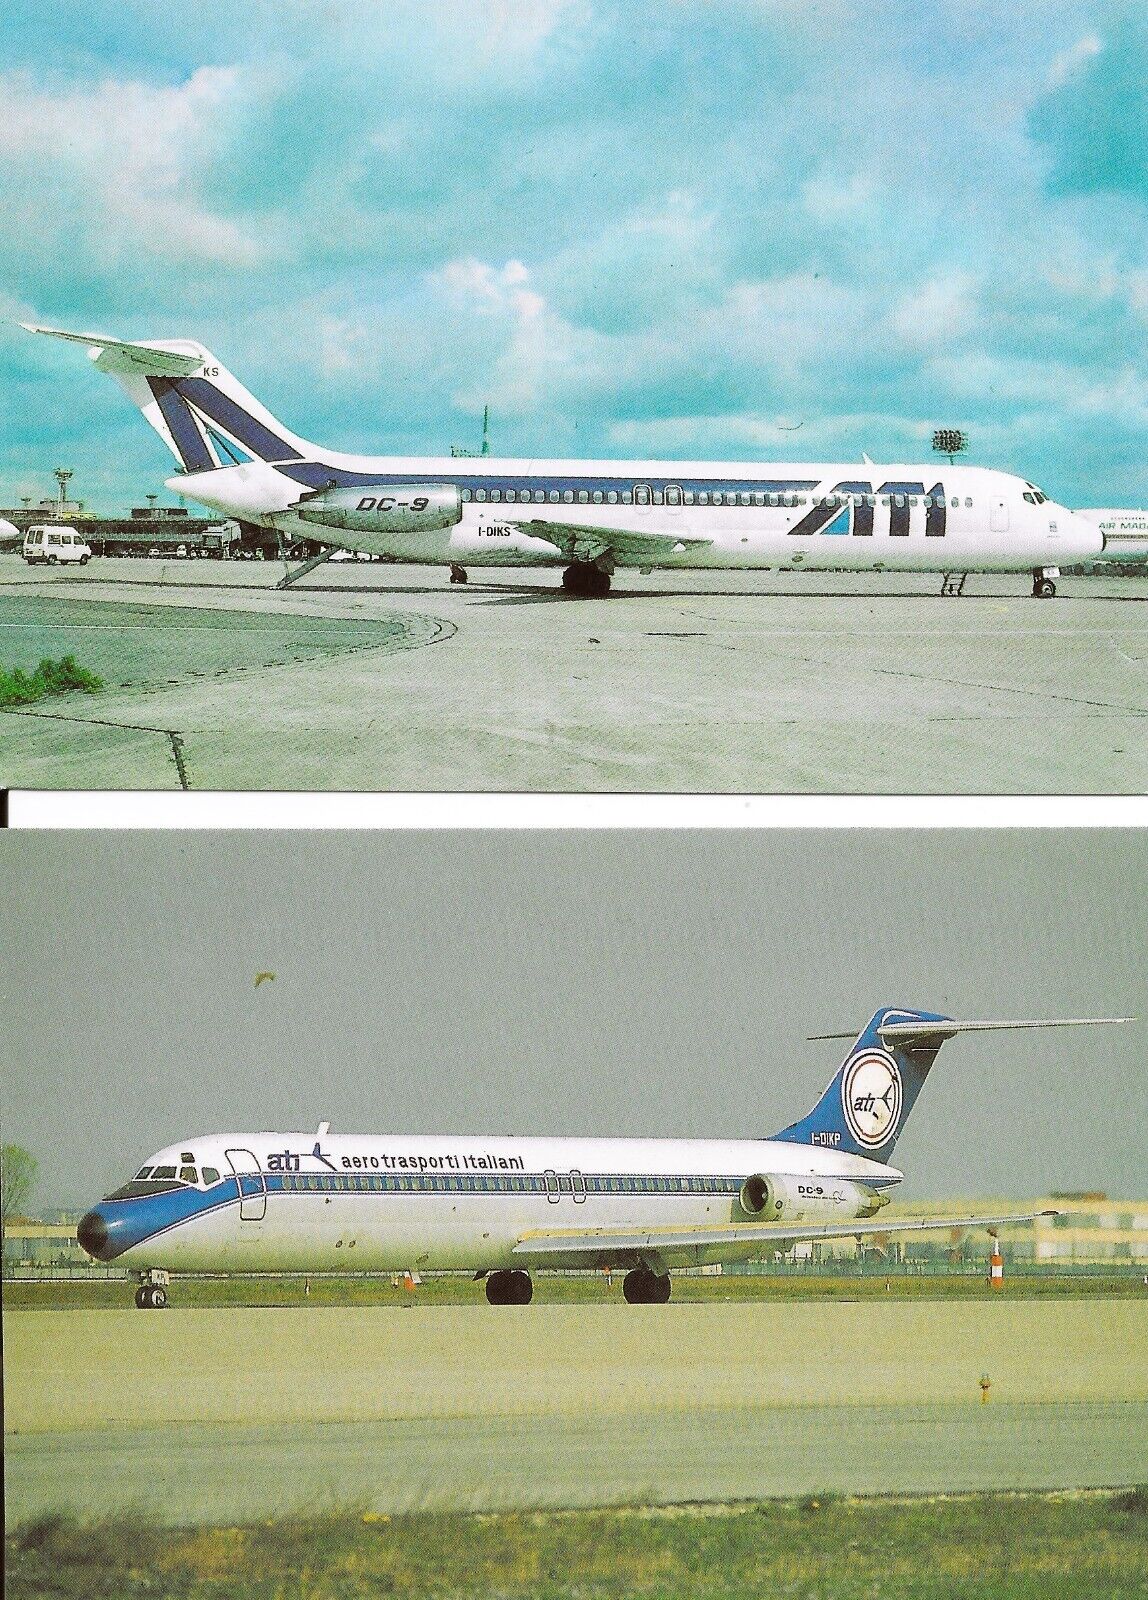 ATI Aero Transporti Italiani 2 McDonnell Douglas DC-9 Postcards,